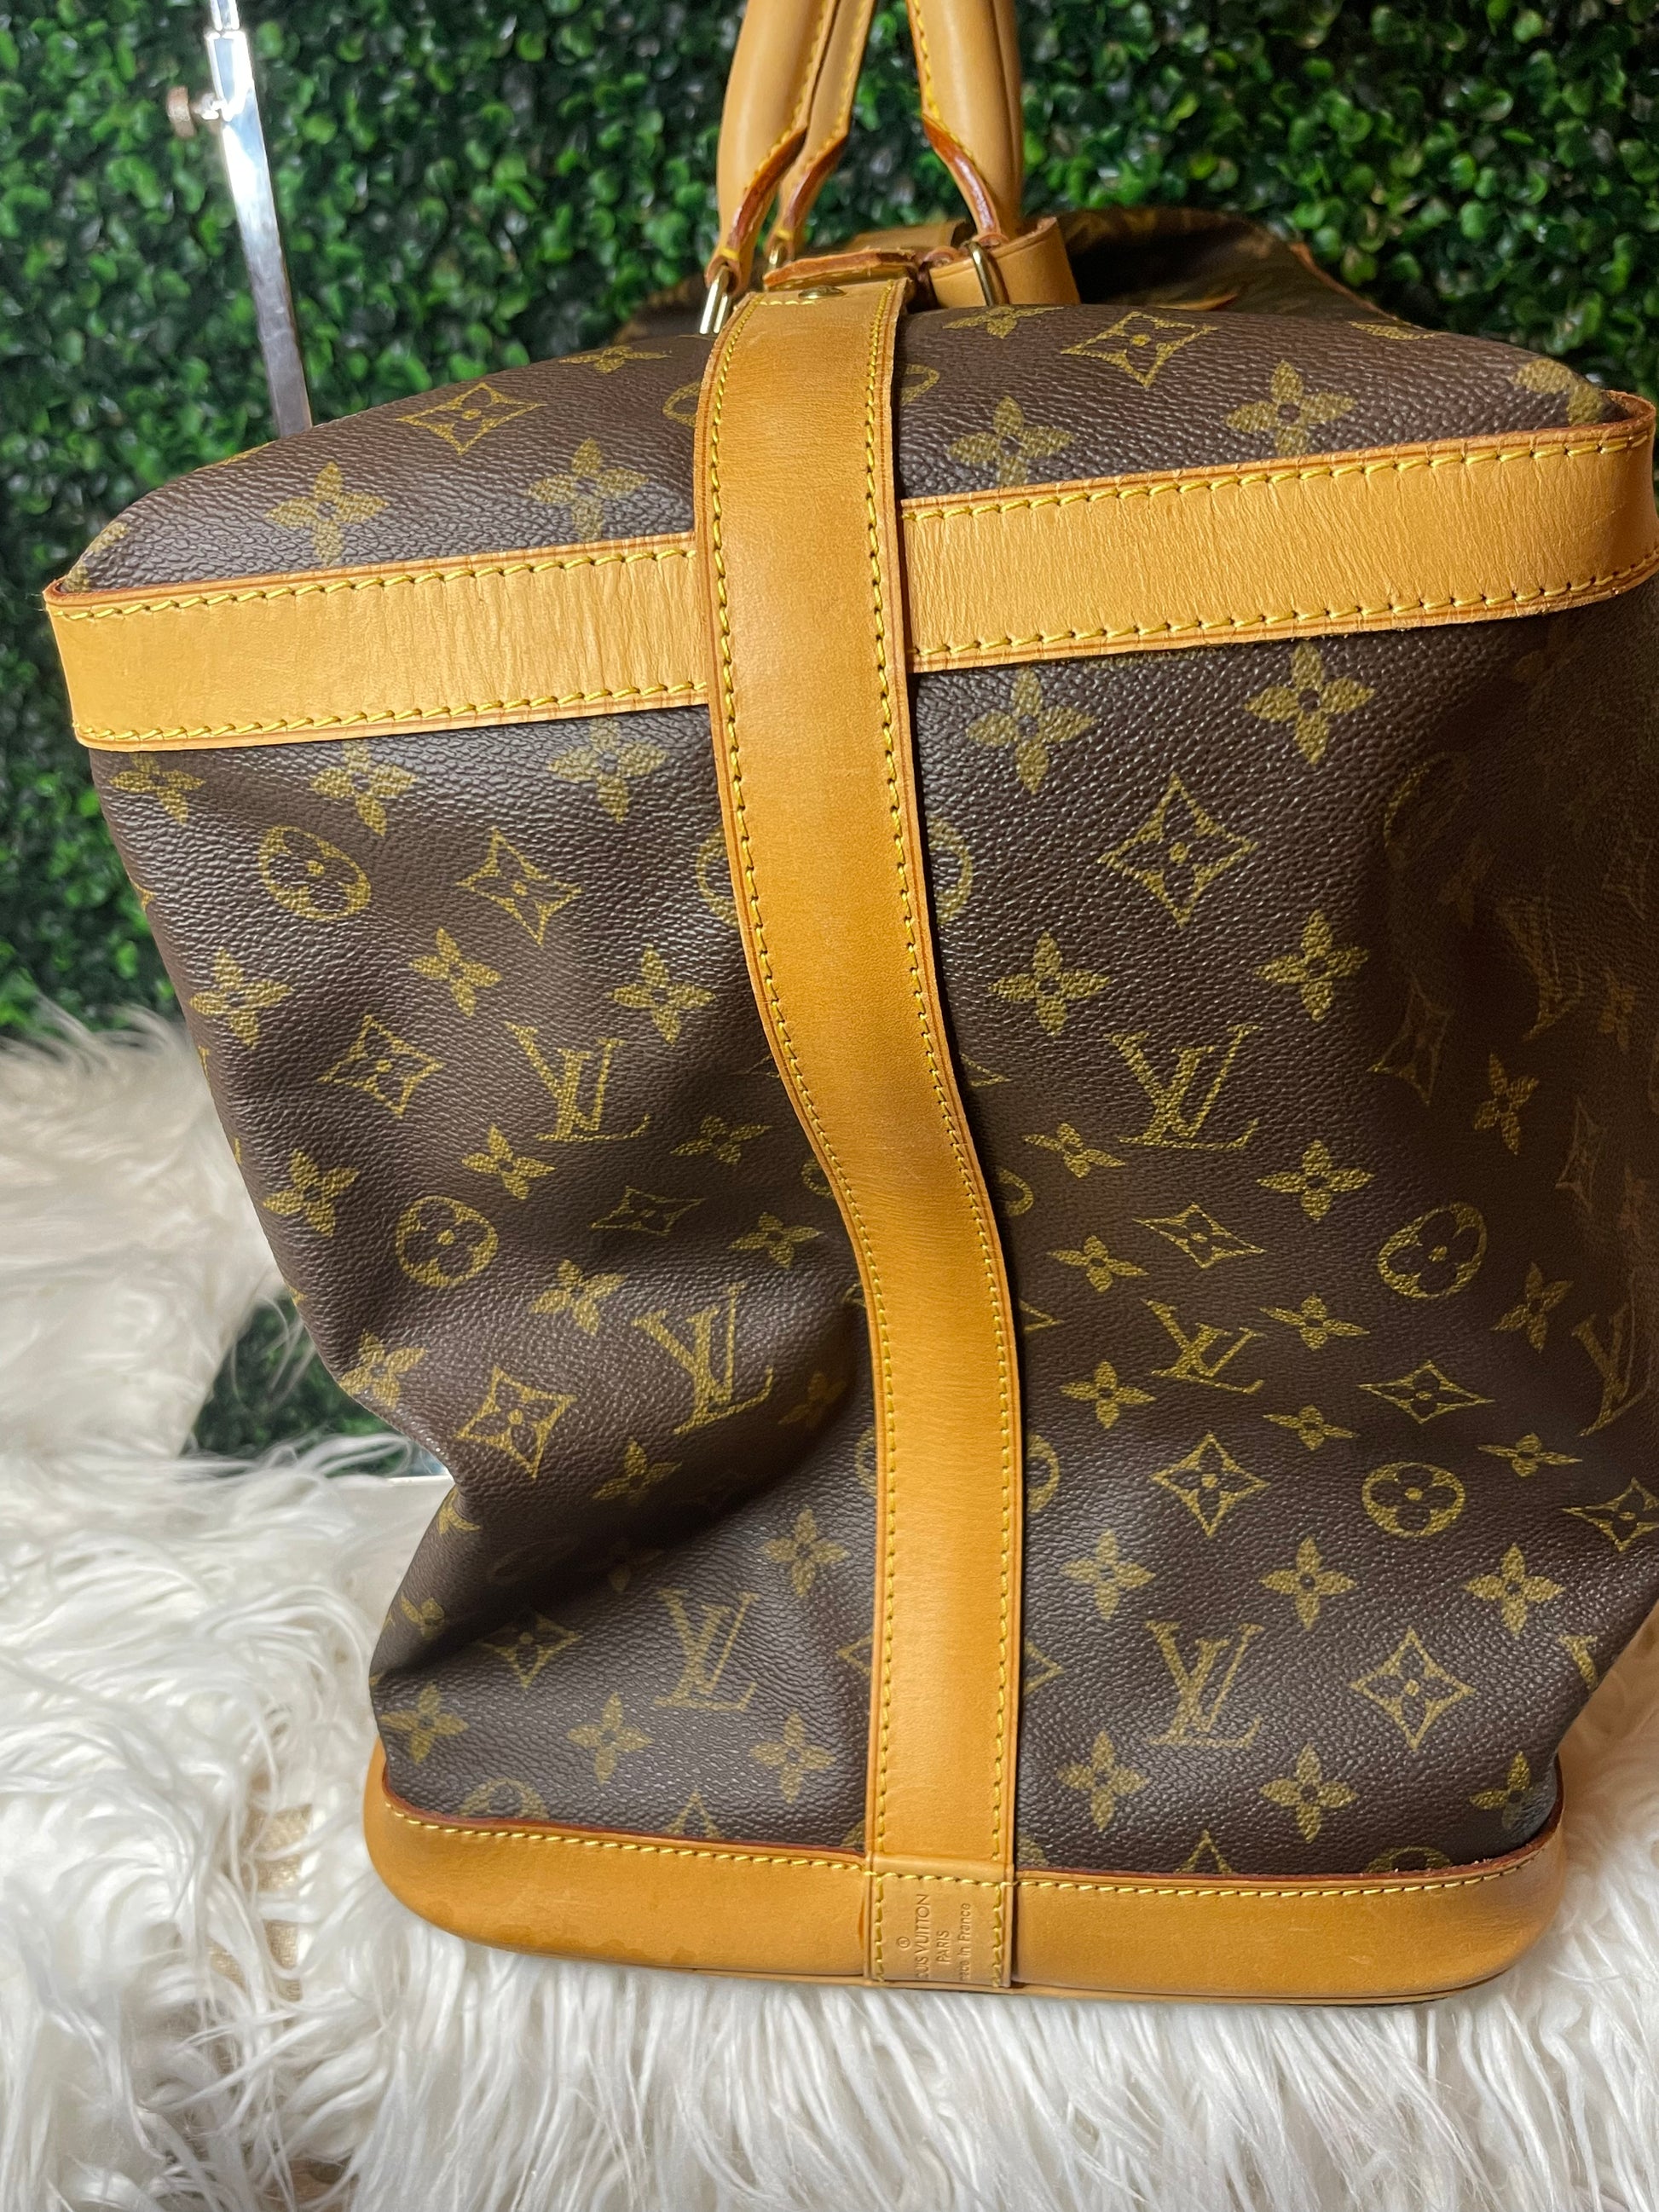 Louis Vuitton Travel Tote Bags